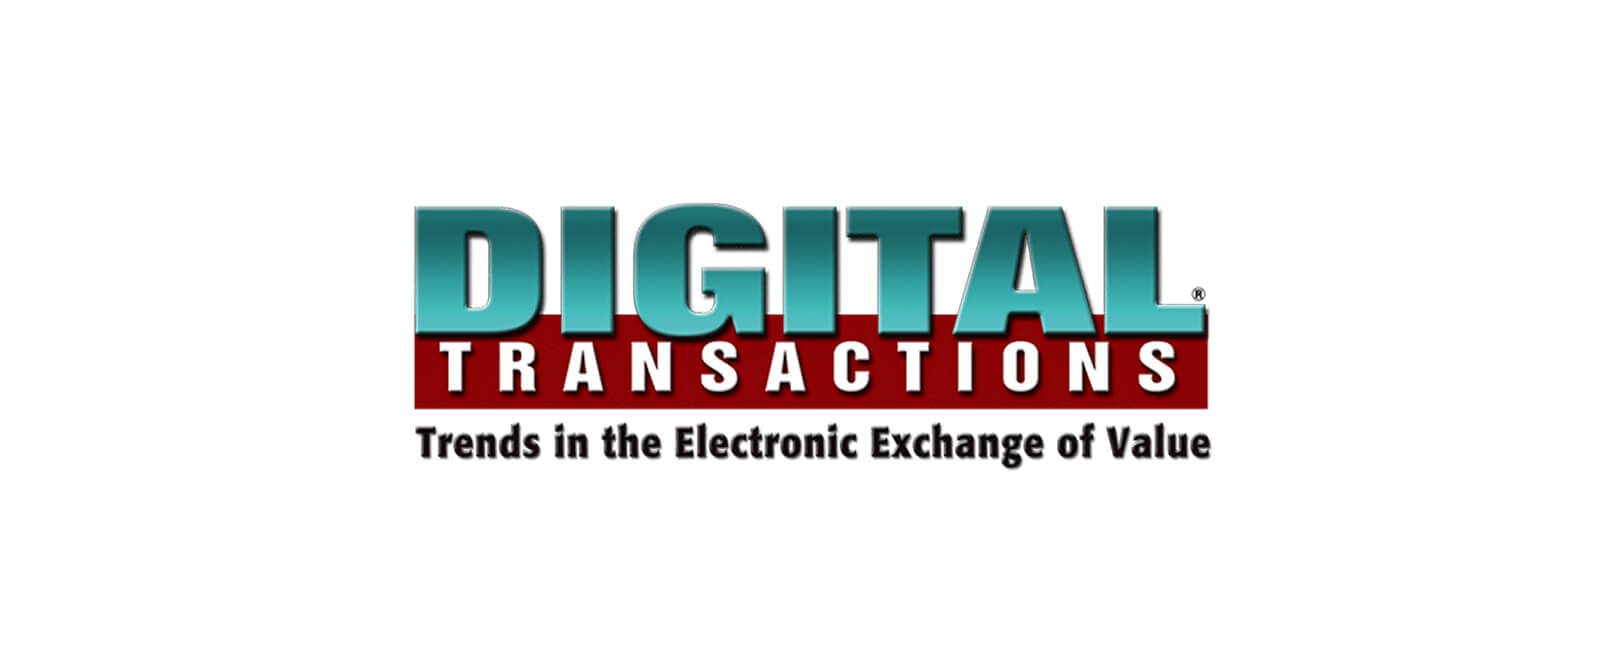 Digital Transactions